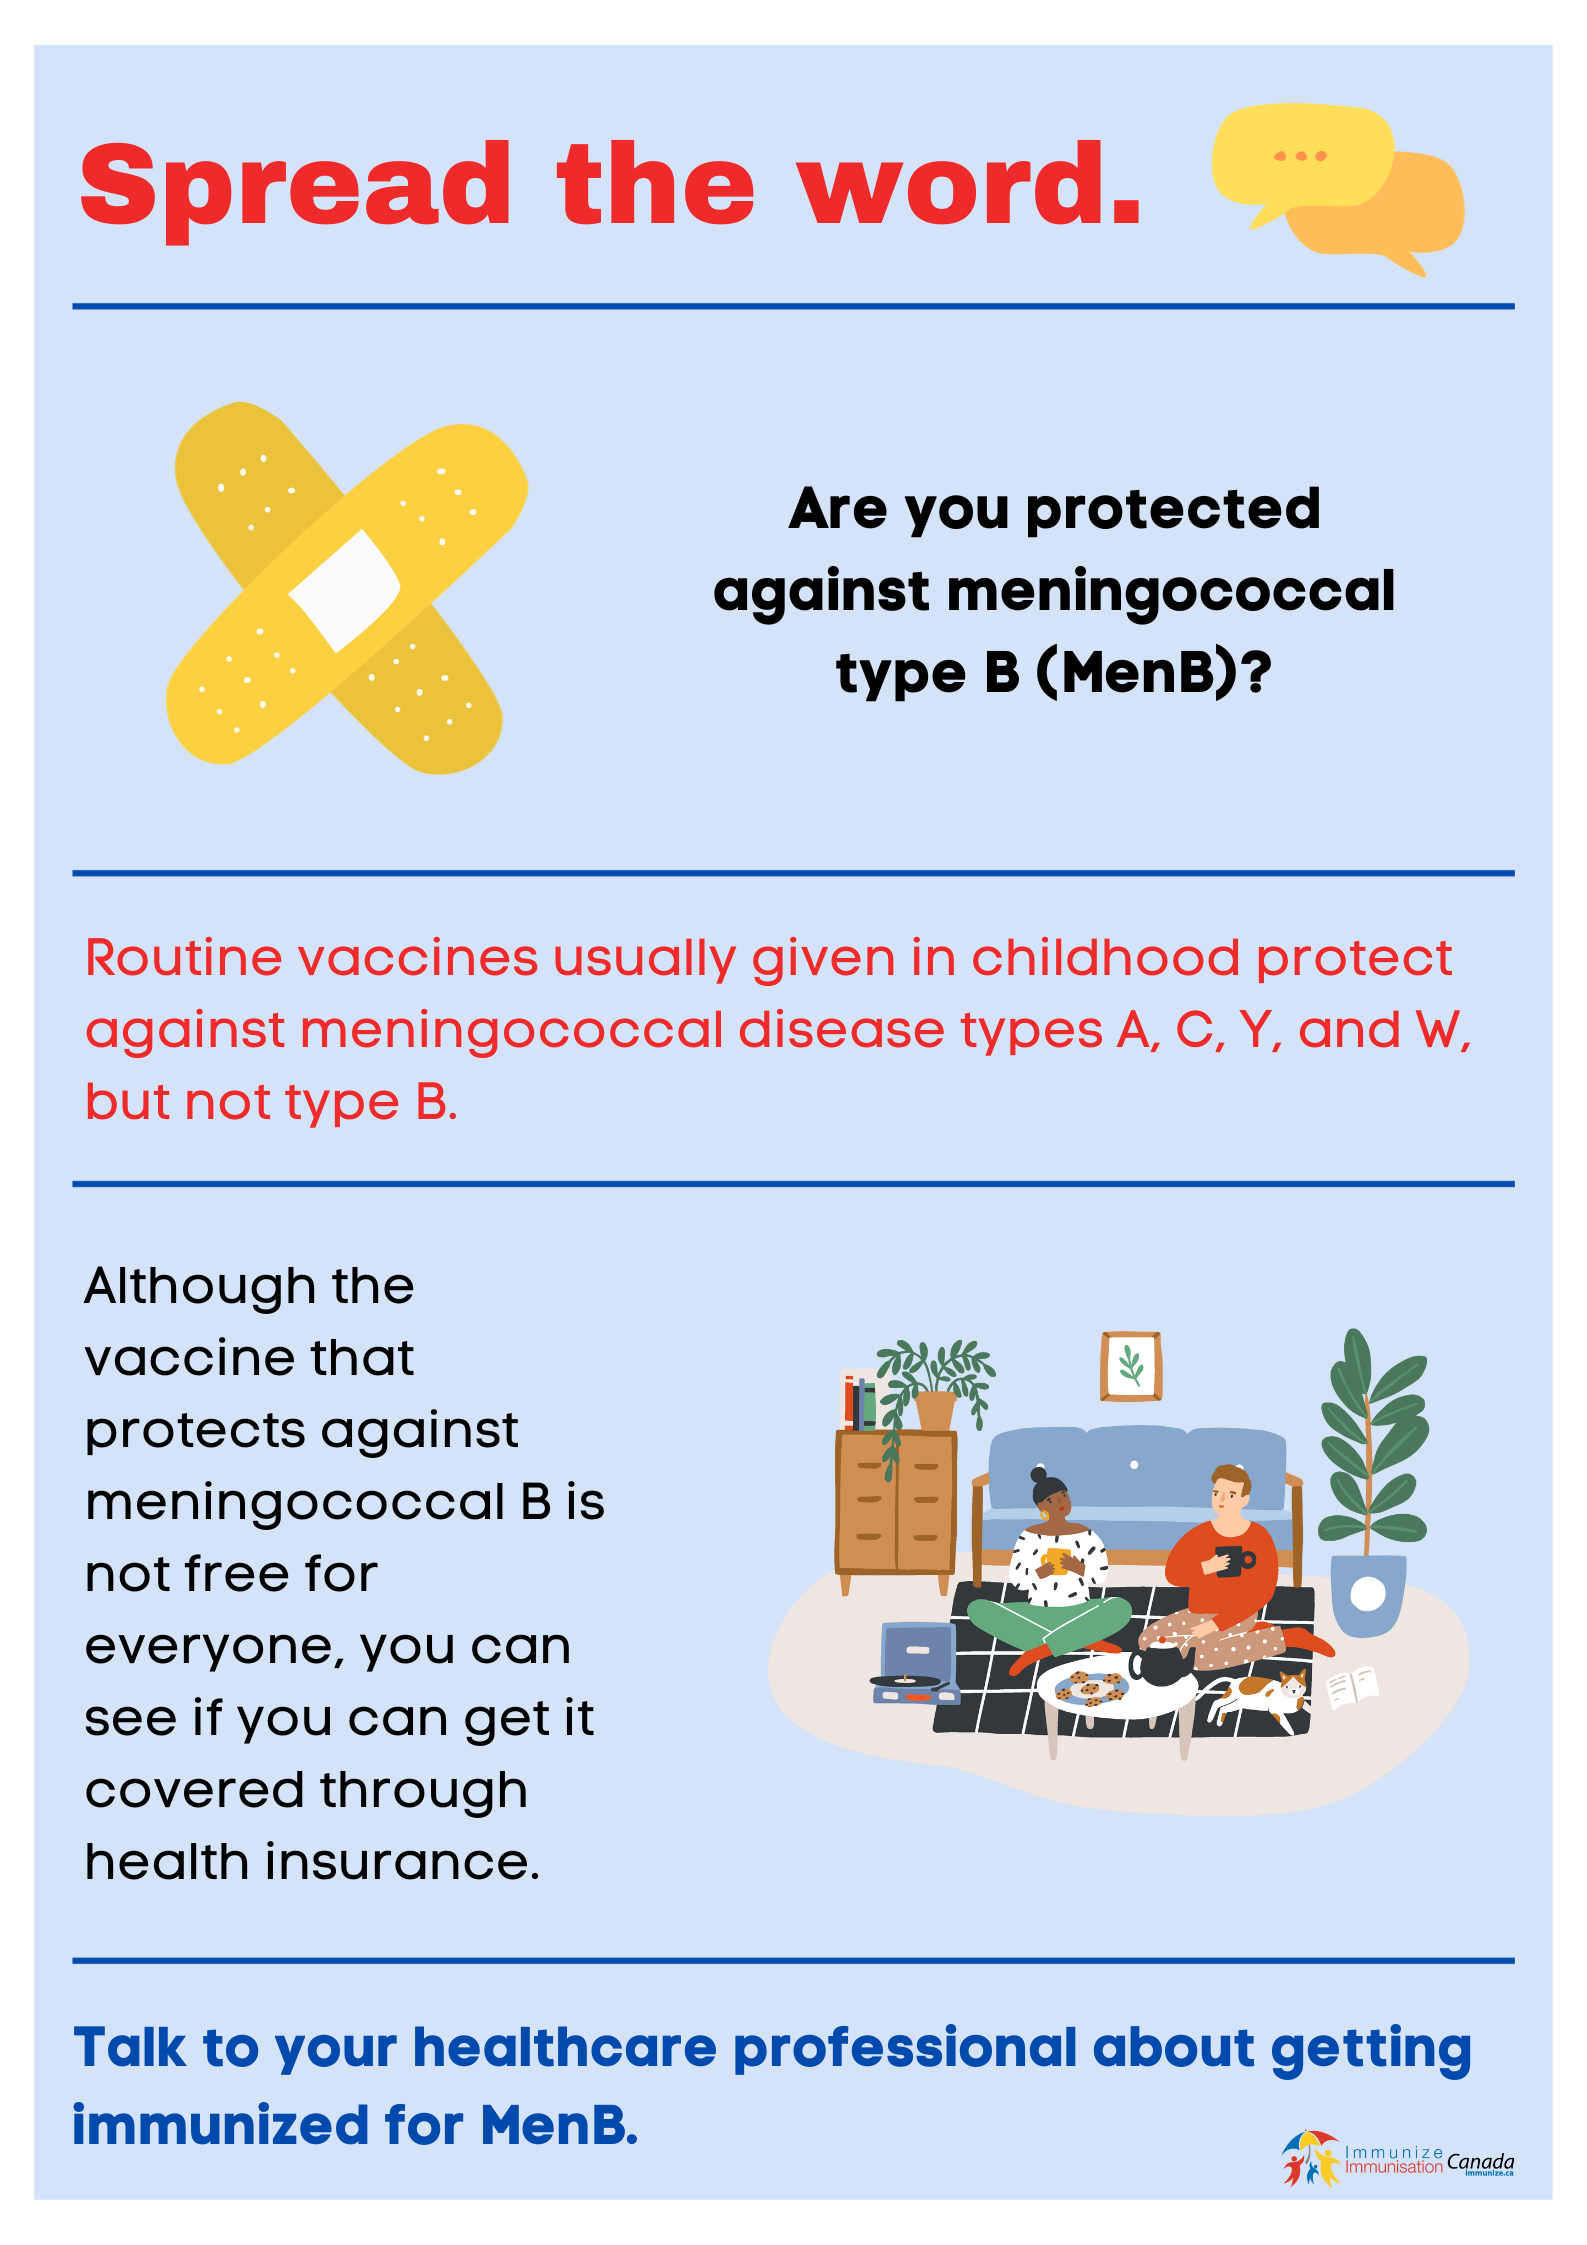 Spread the word - meningococcal B immunization - poster 6